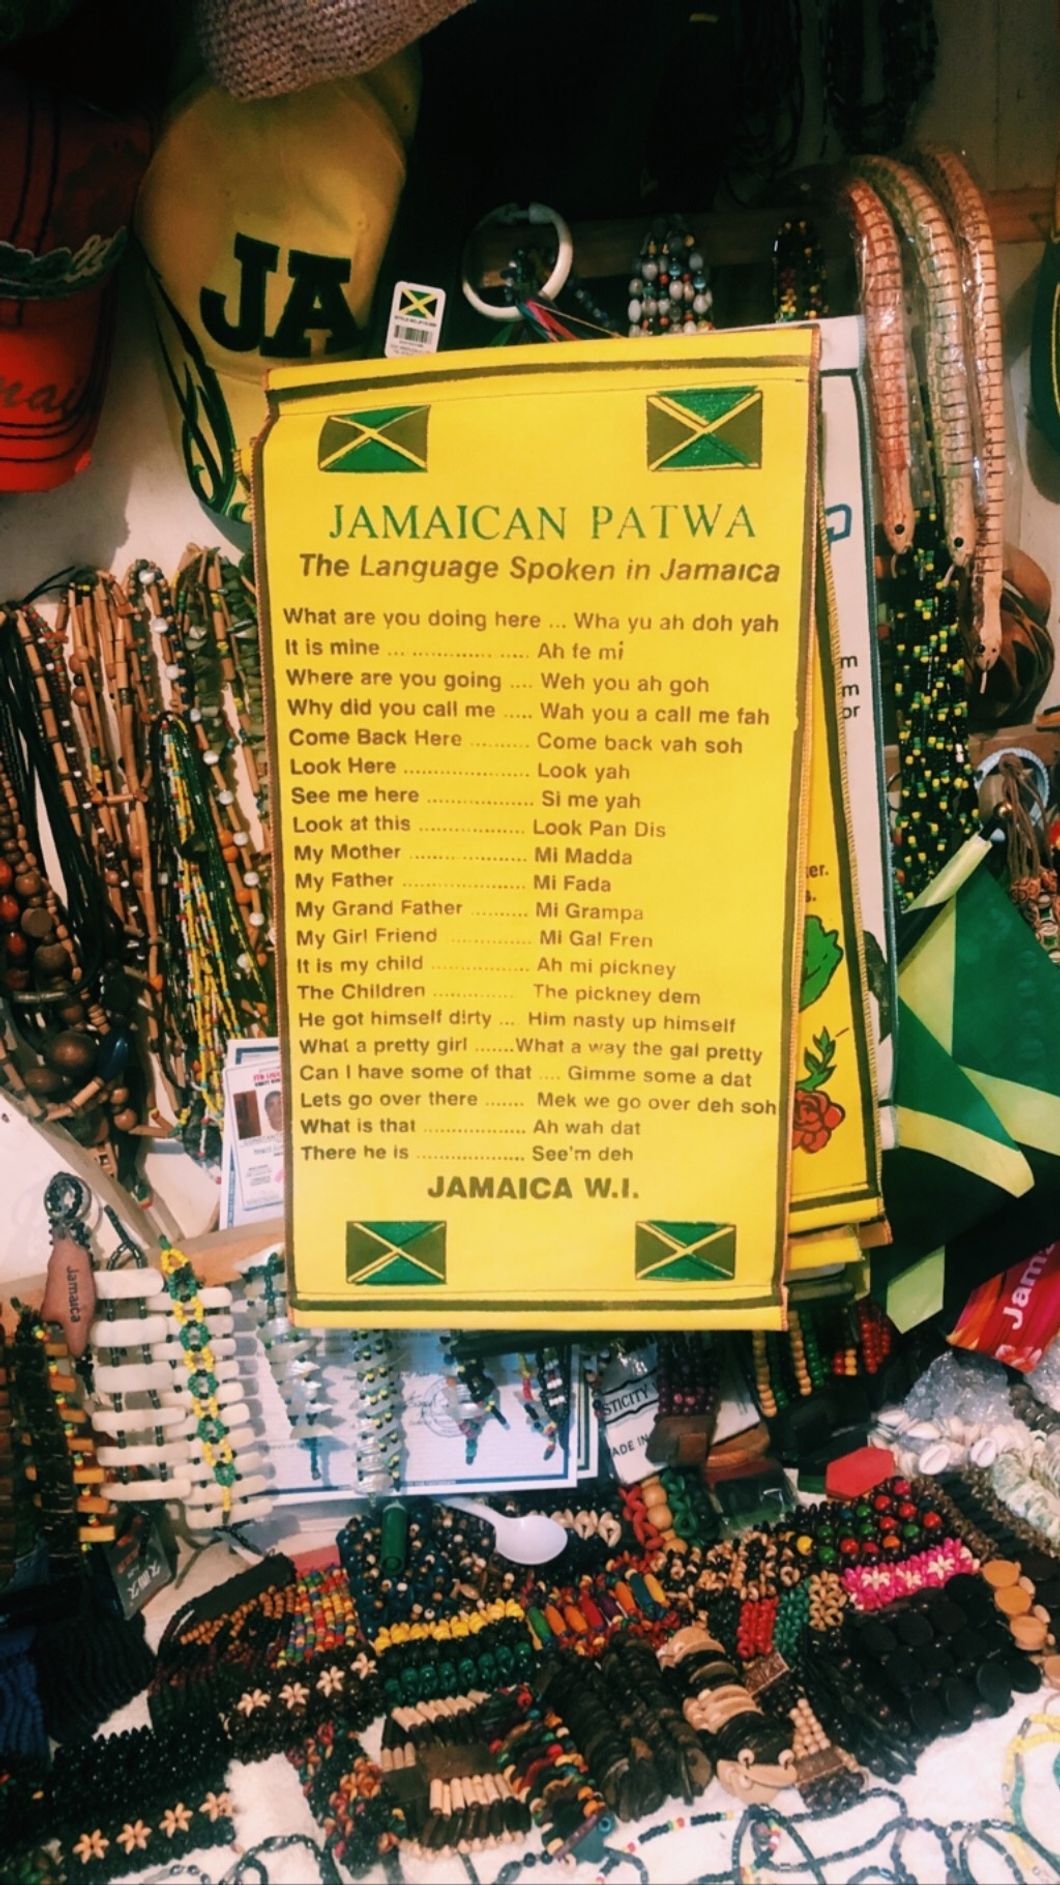 Top 5 Favorite Things I Enjoyed In Jamaica